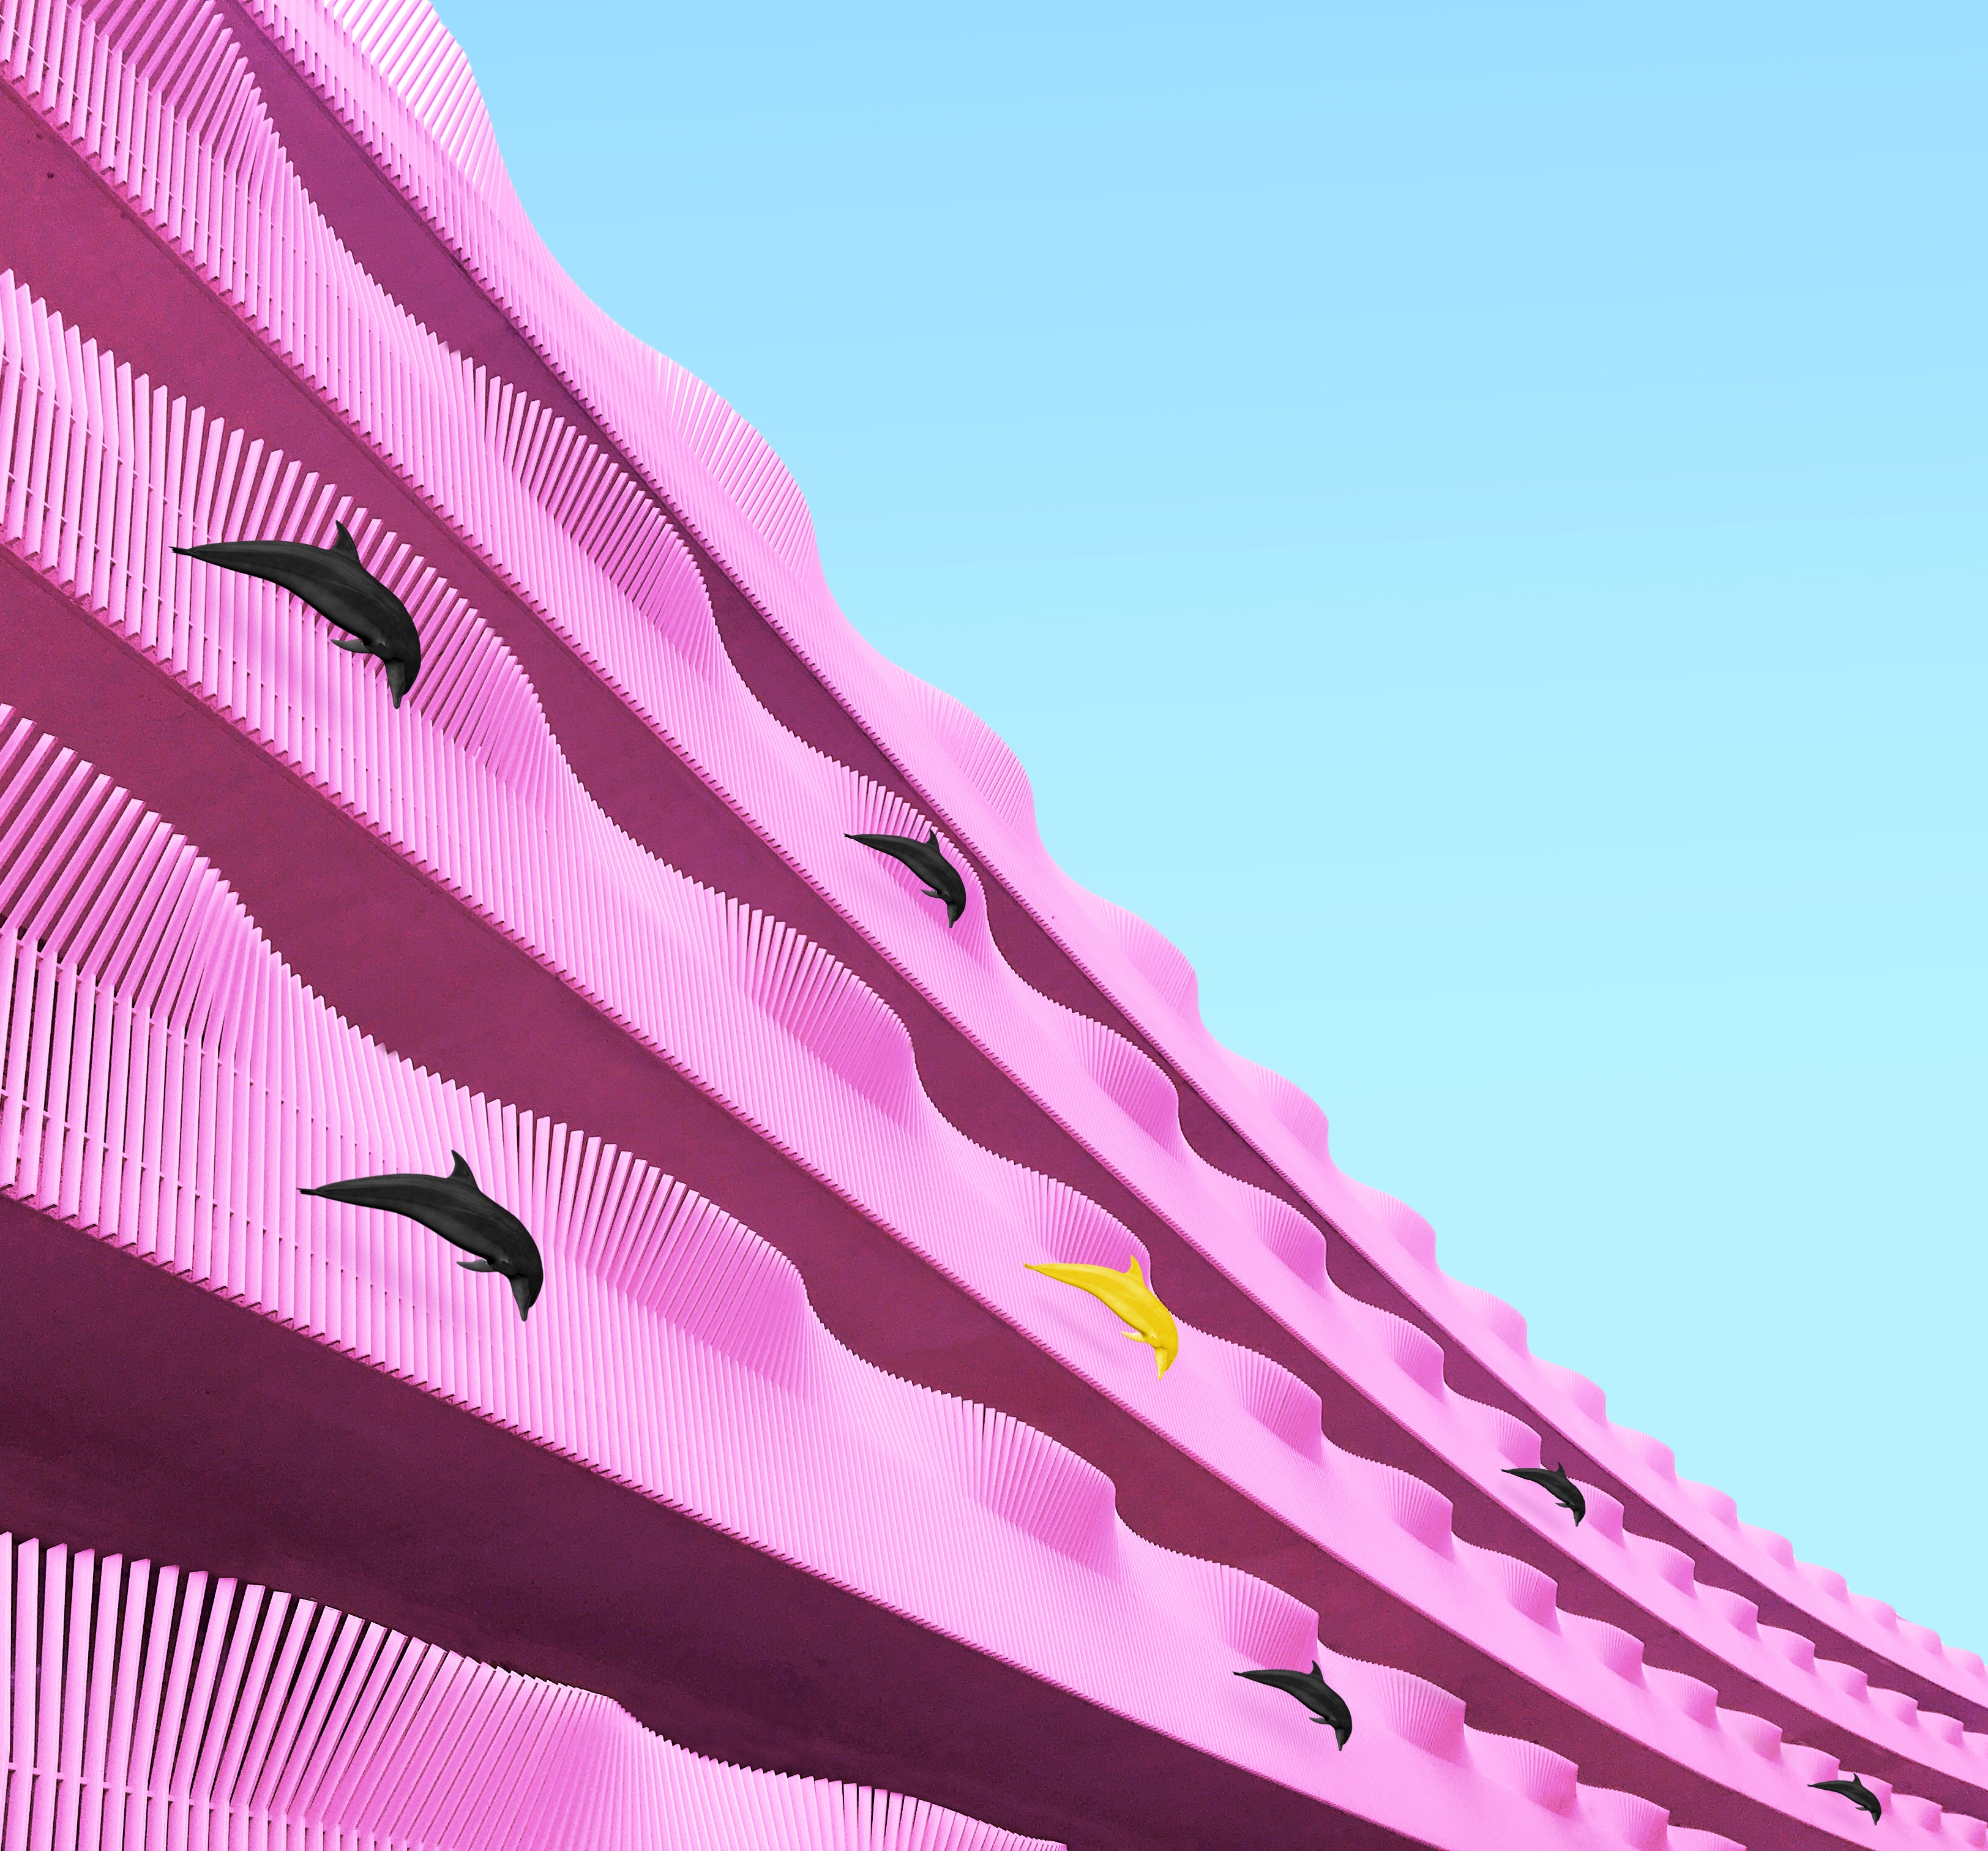 dolfins, pink, architecture, building, miscellanea, miscellaneous, wavy, facade Image for desktop